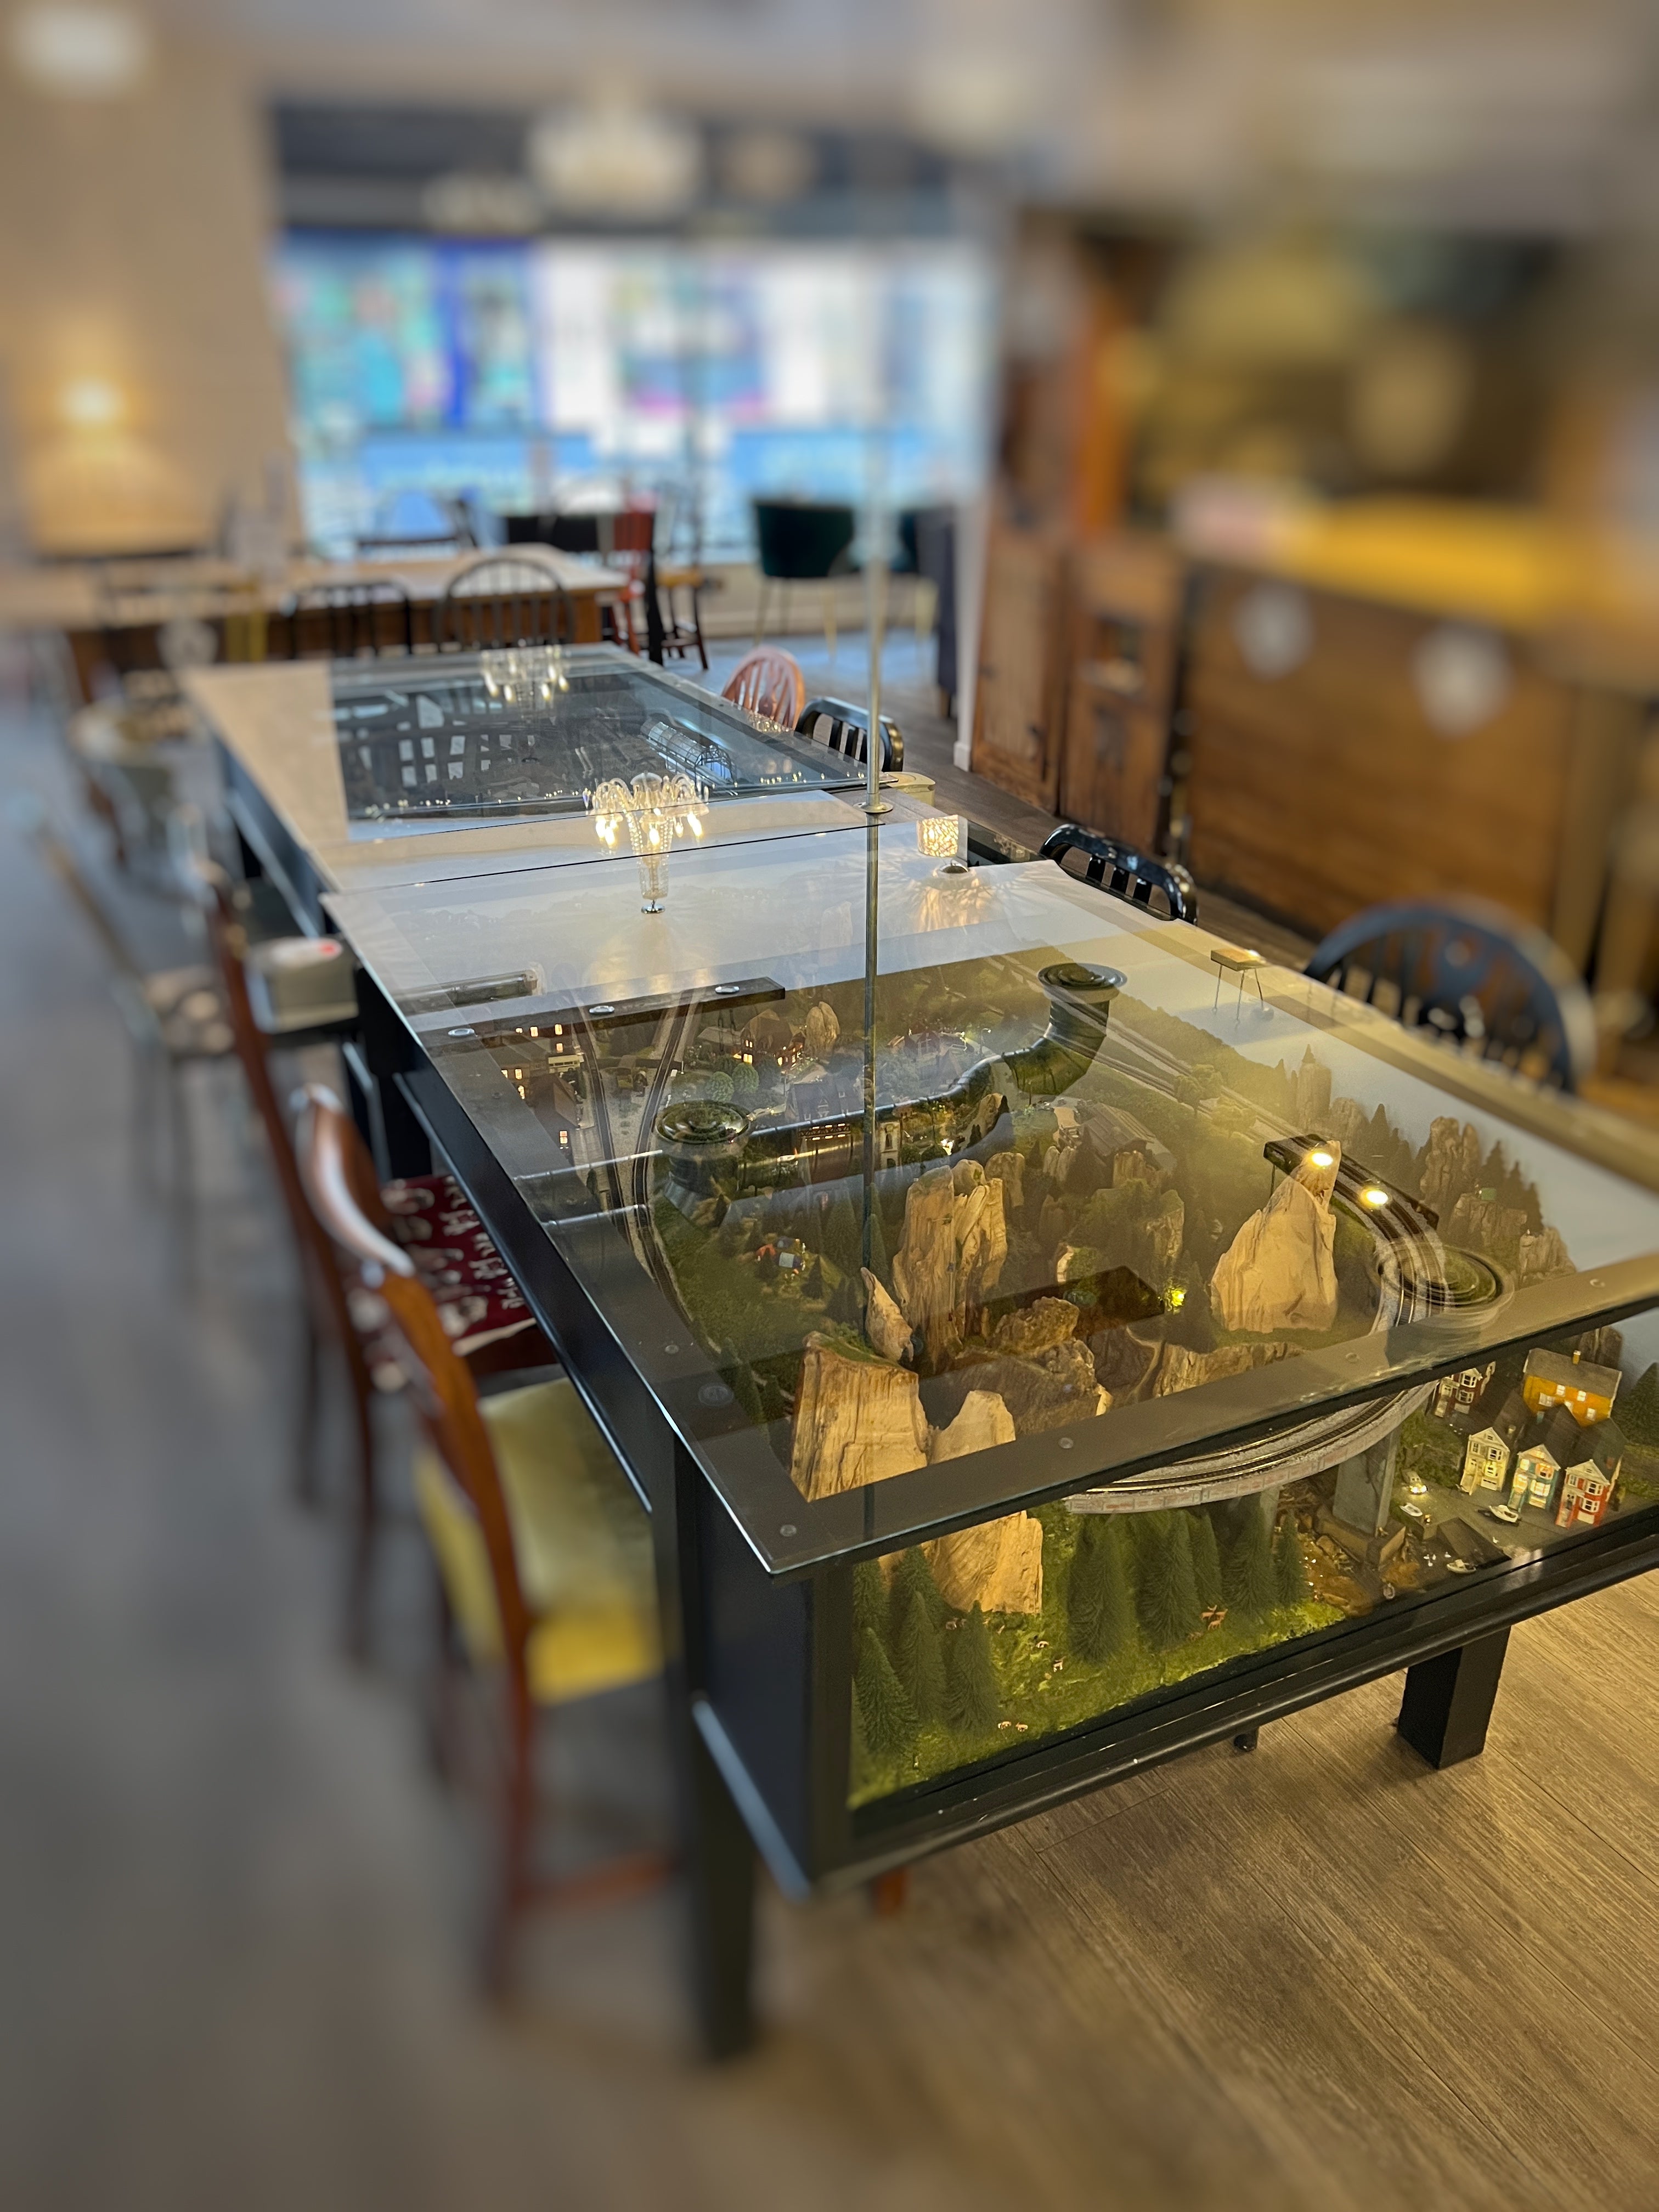 Dining Room | Office | Café | Shop | Restaurant Model Railway Table